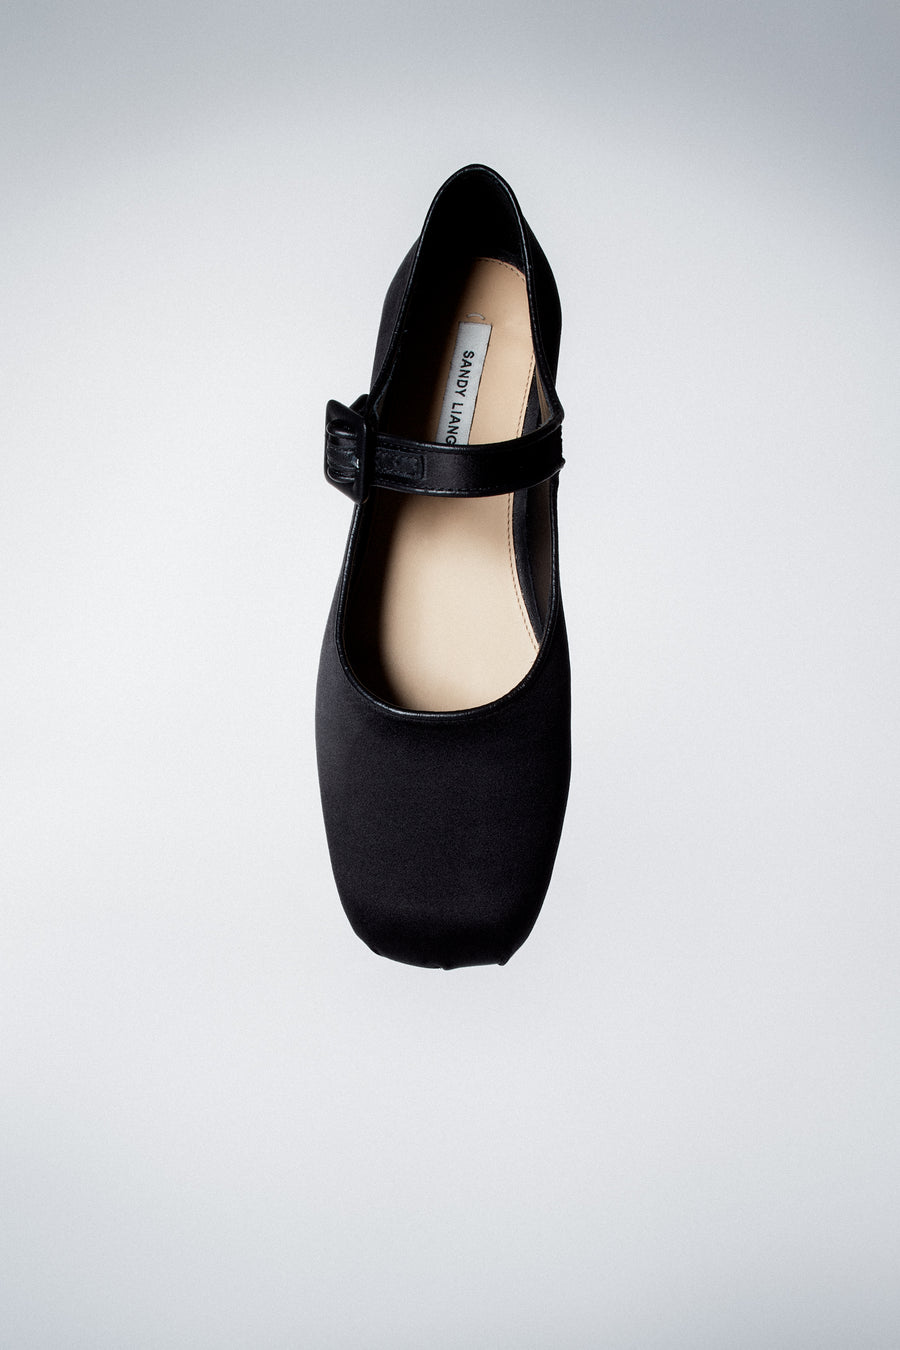 Mary Jane Pointe ballet flat shoe in black satin